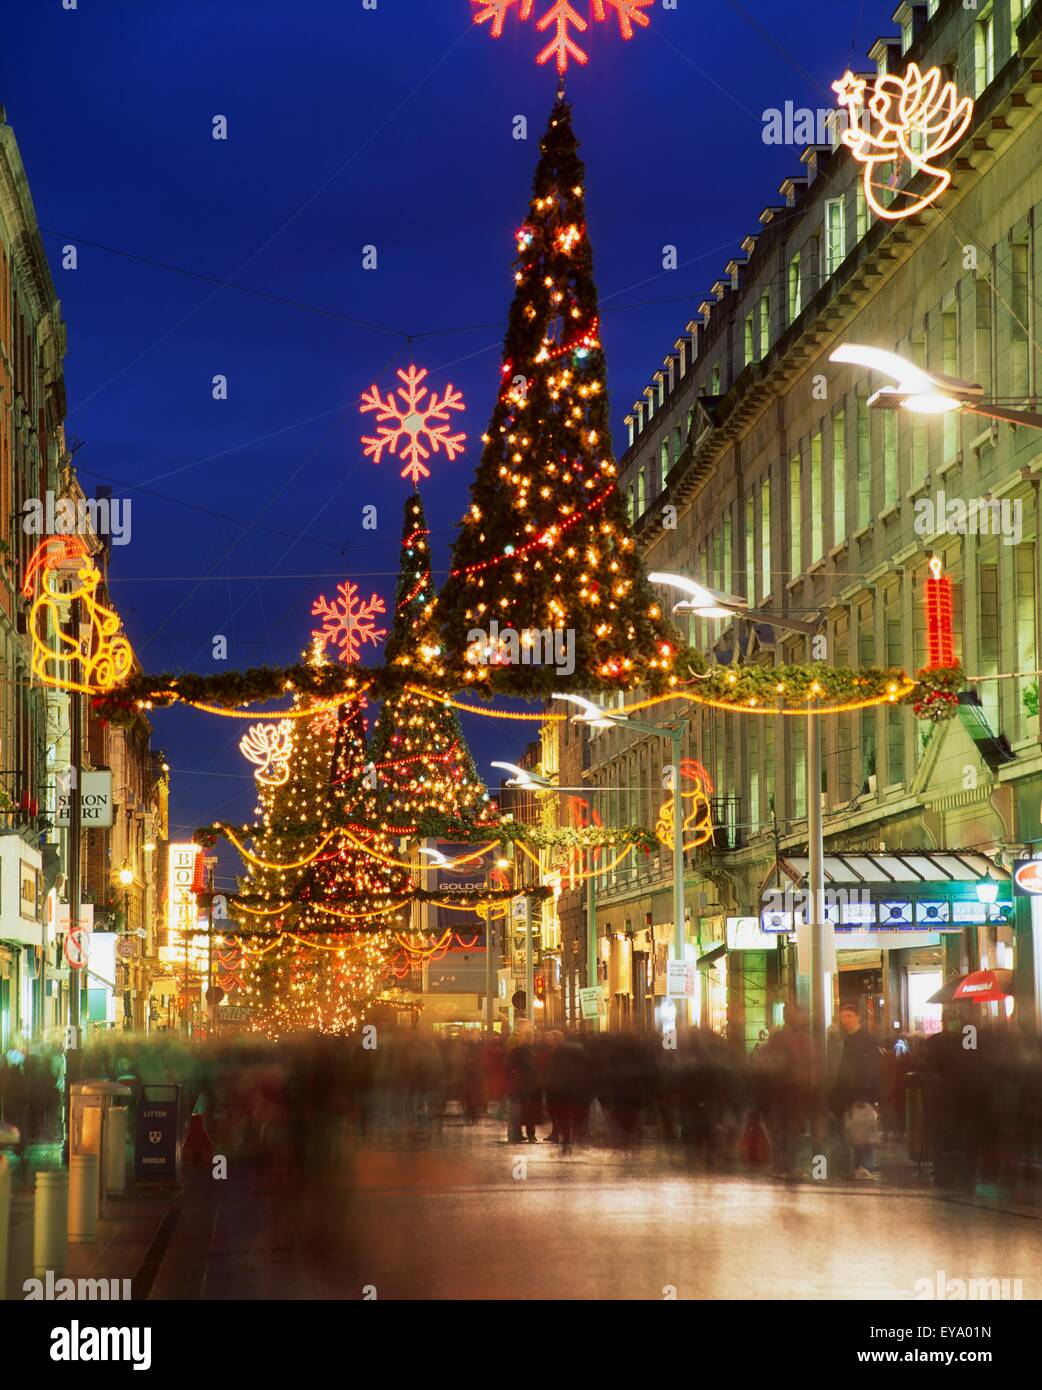 Christmas In Dublin, Henry Street At Night, Dublin,Ireland Stock ...